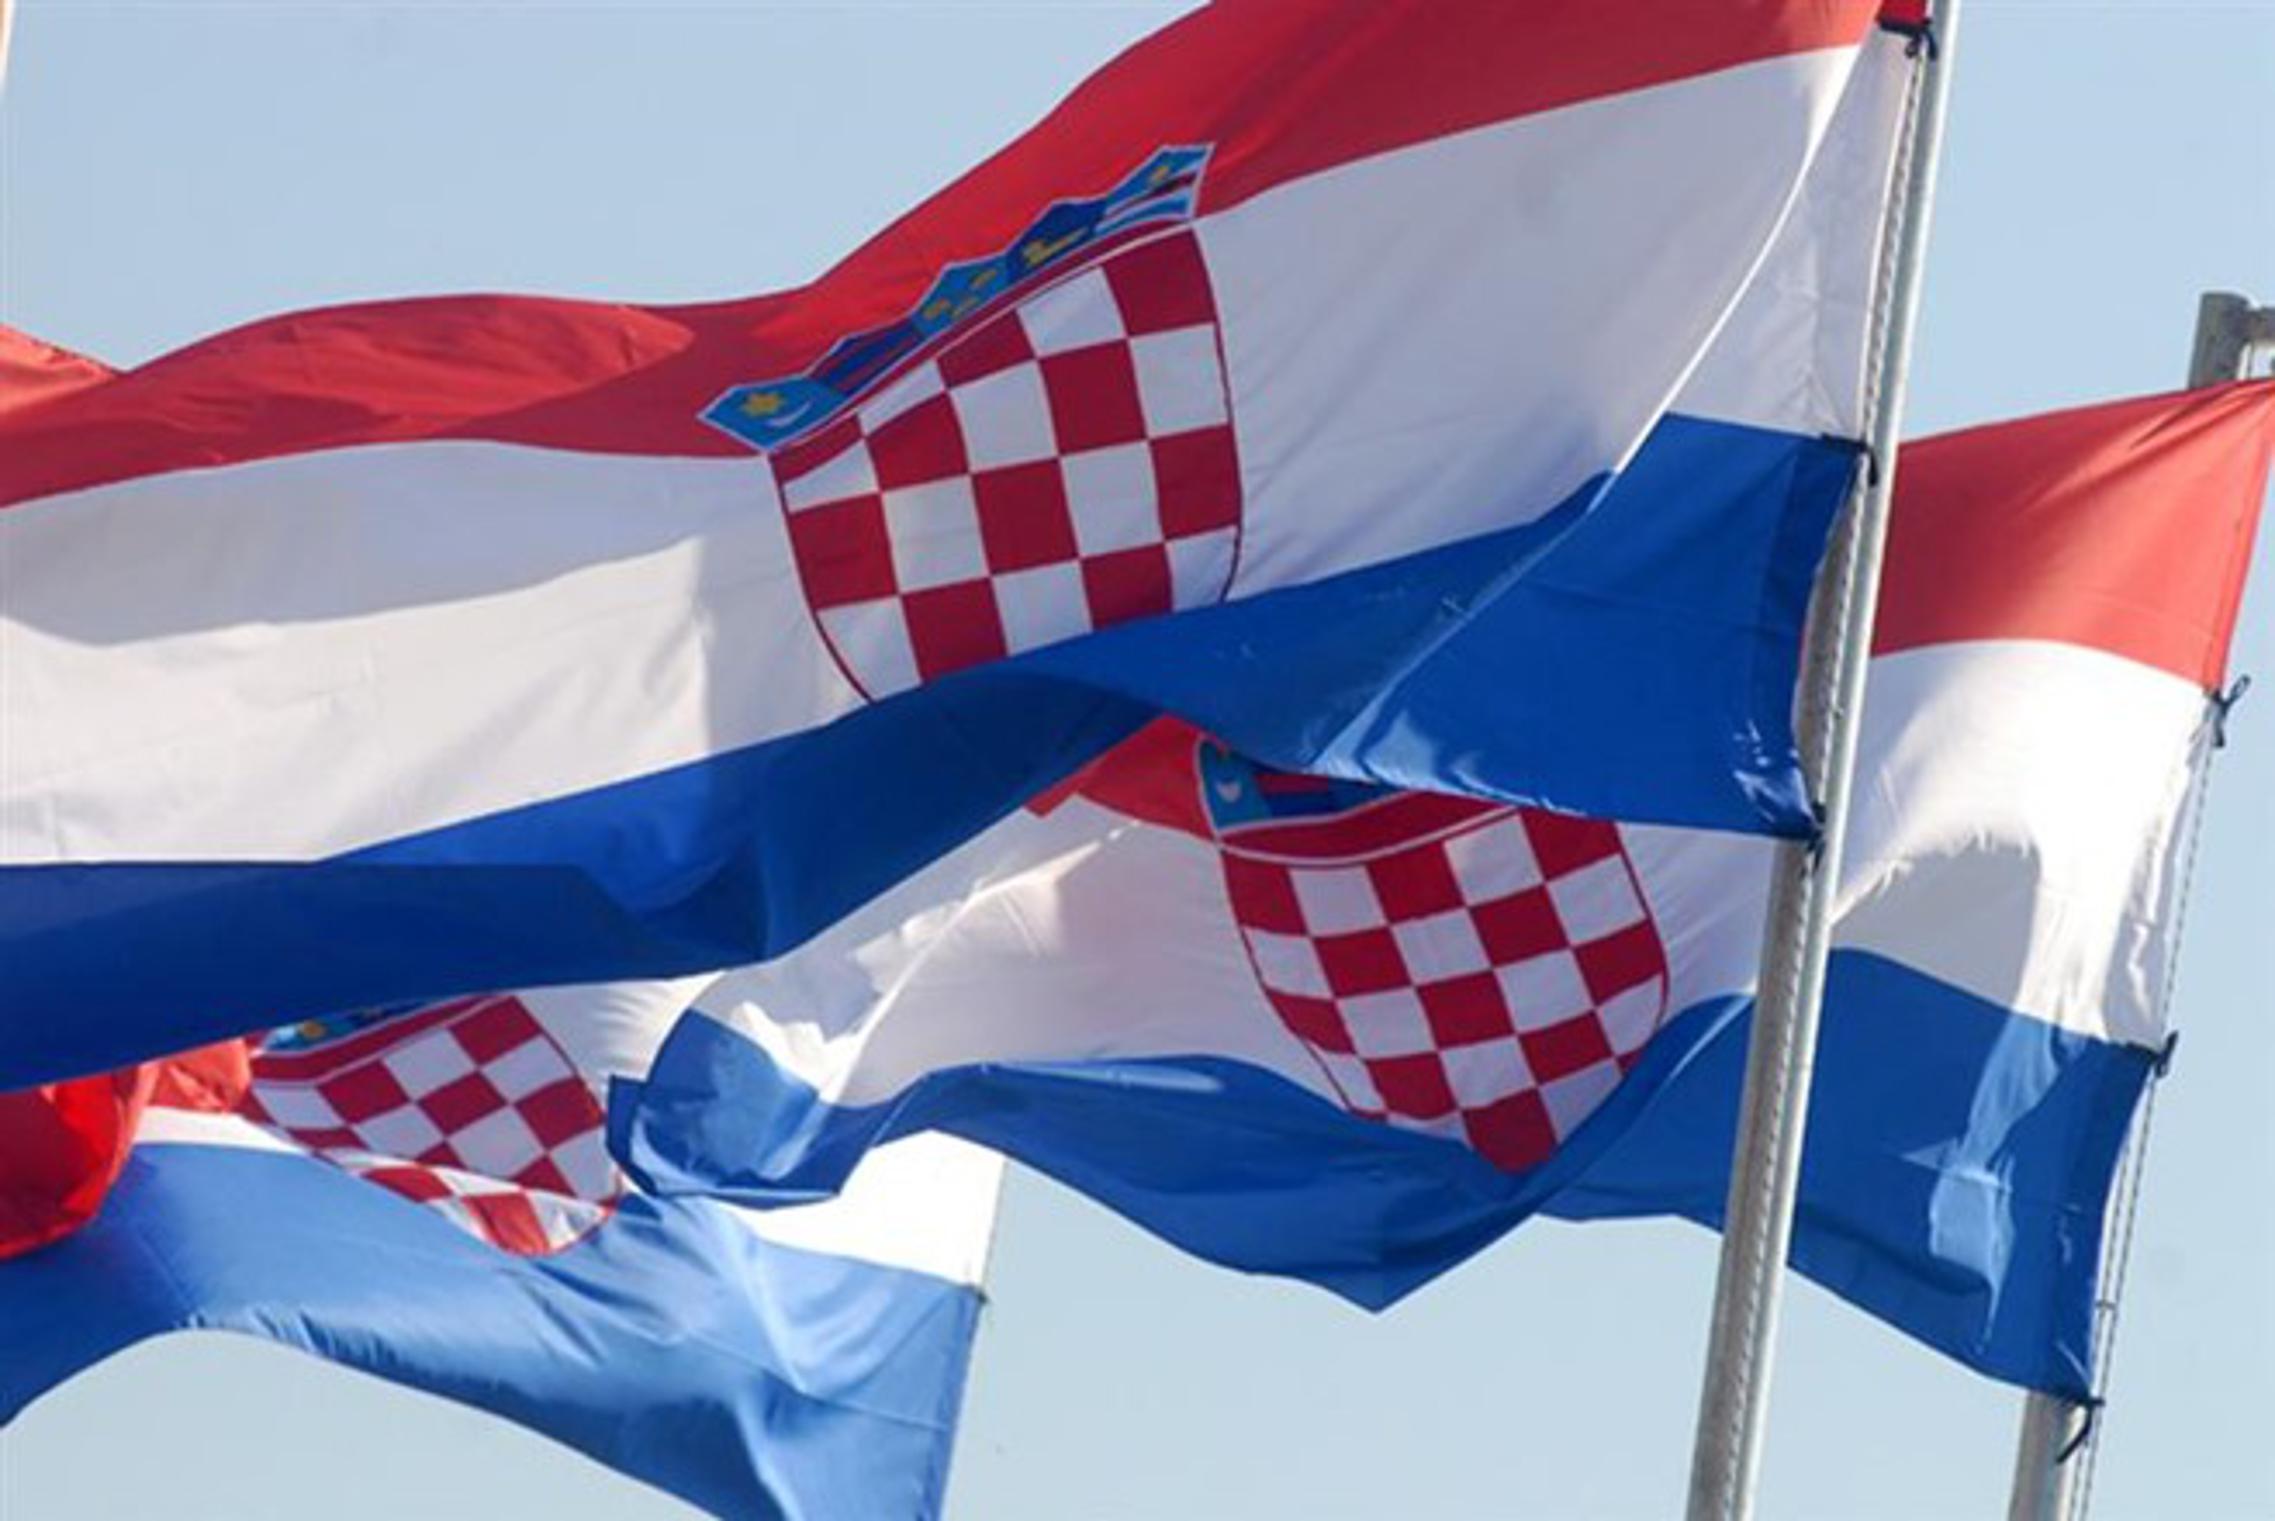 Hrvatske zastave u Kninu